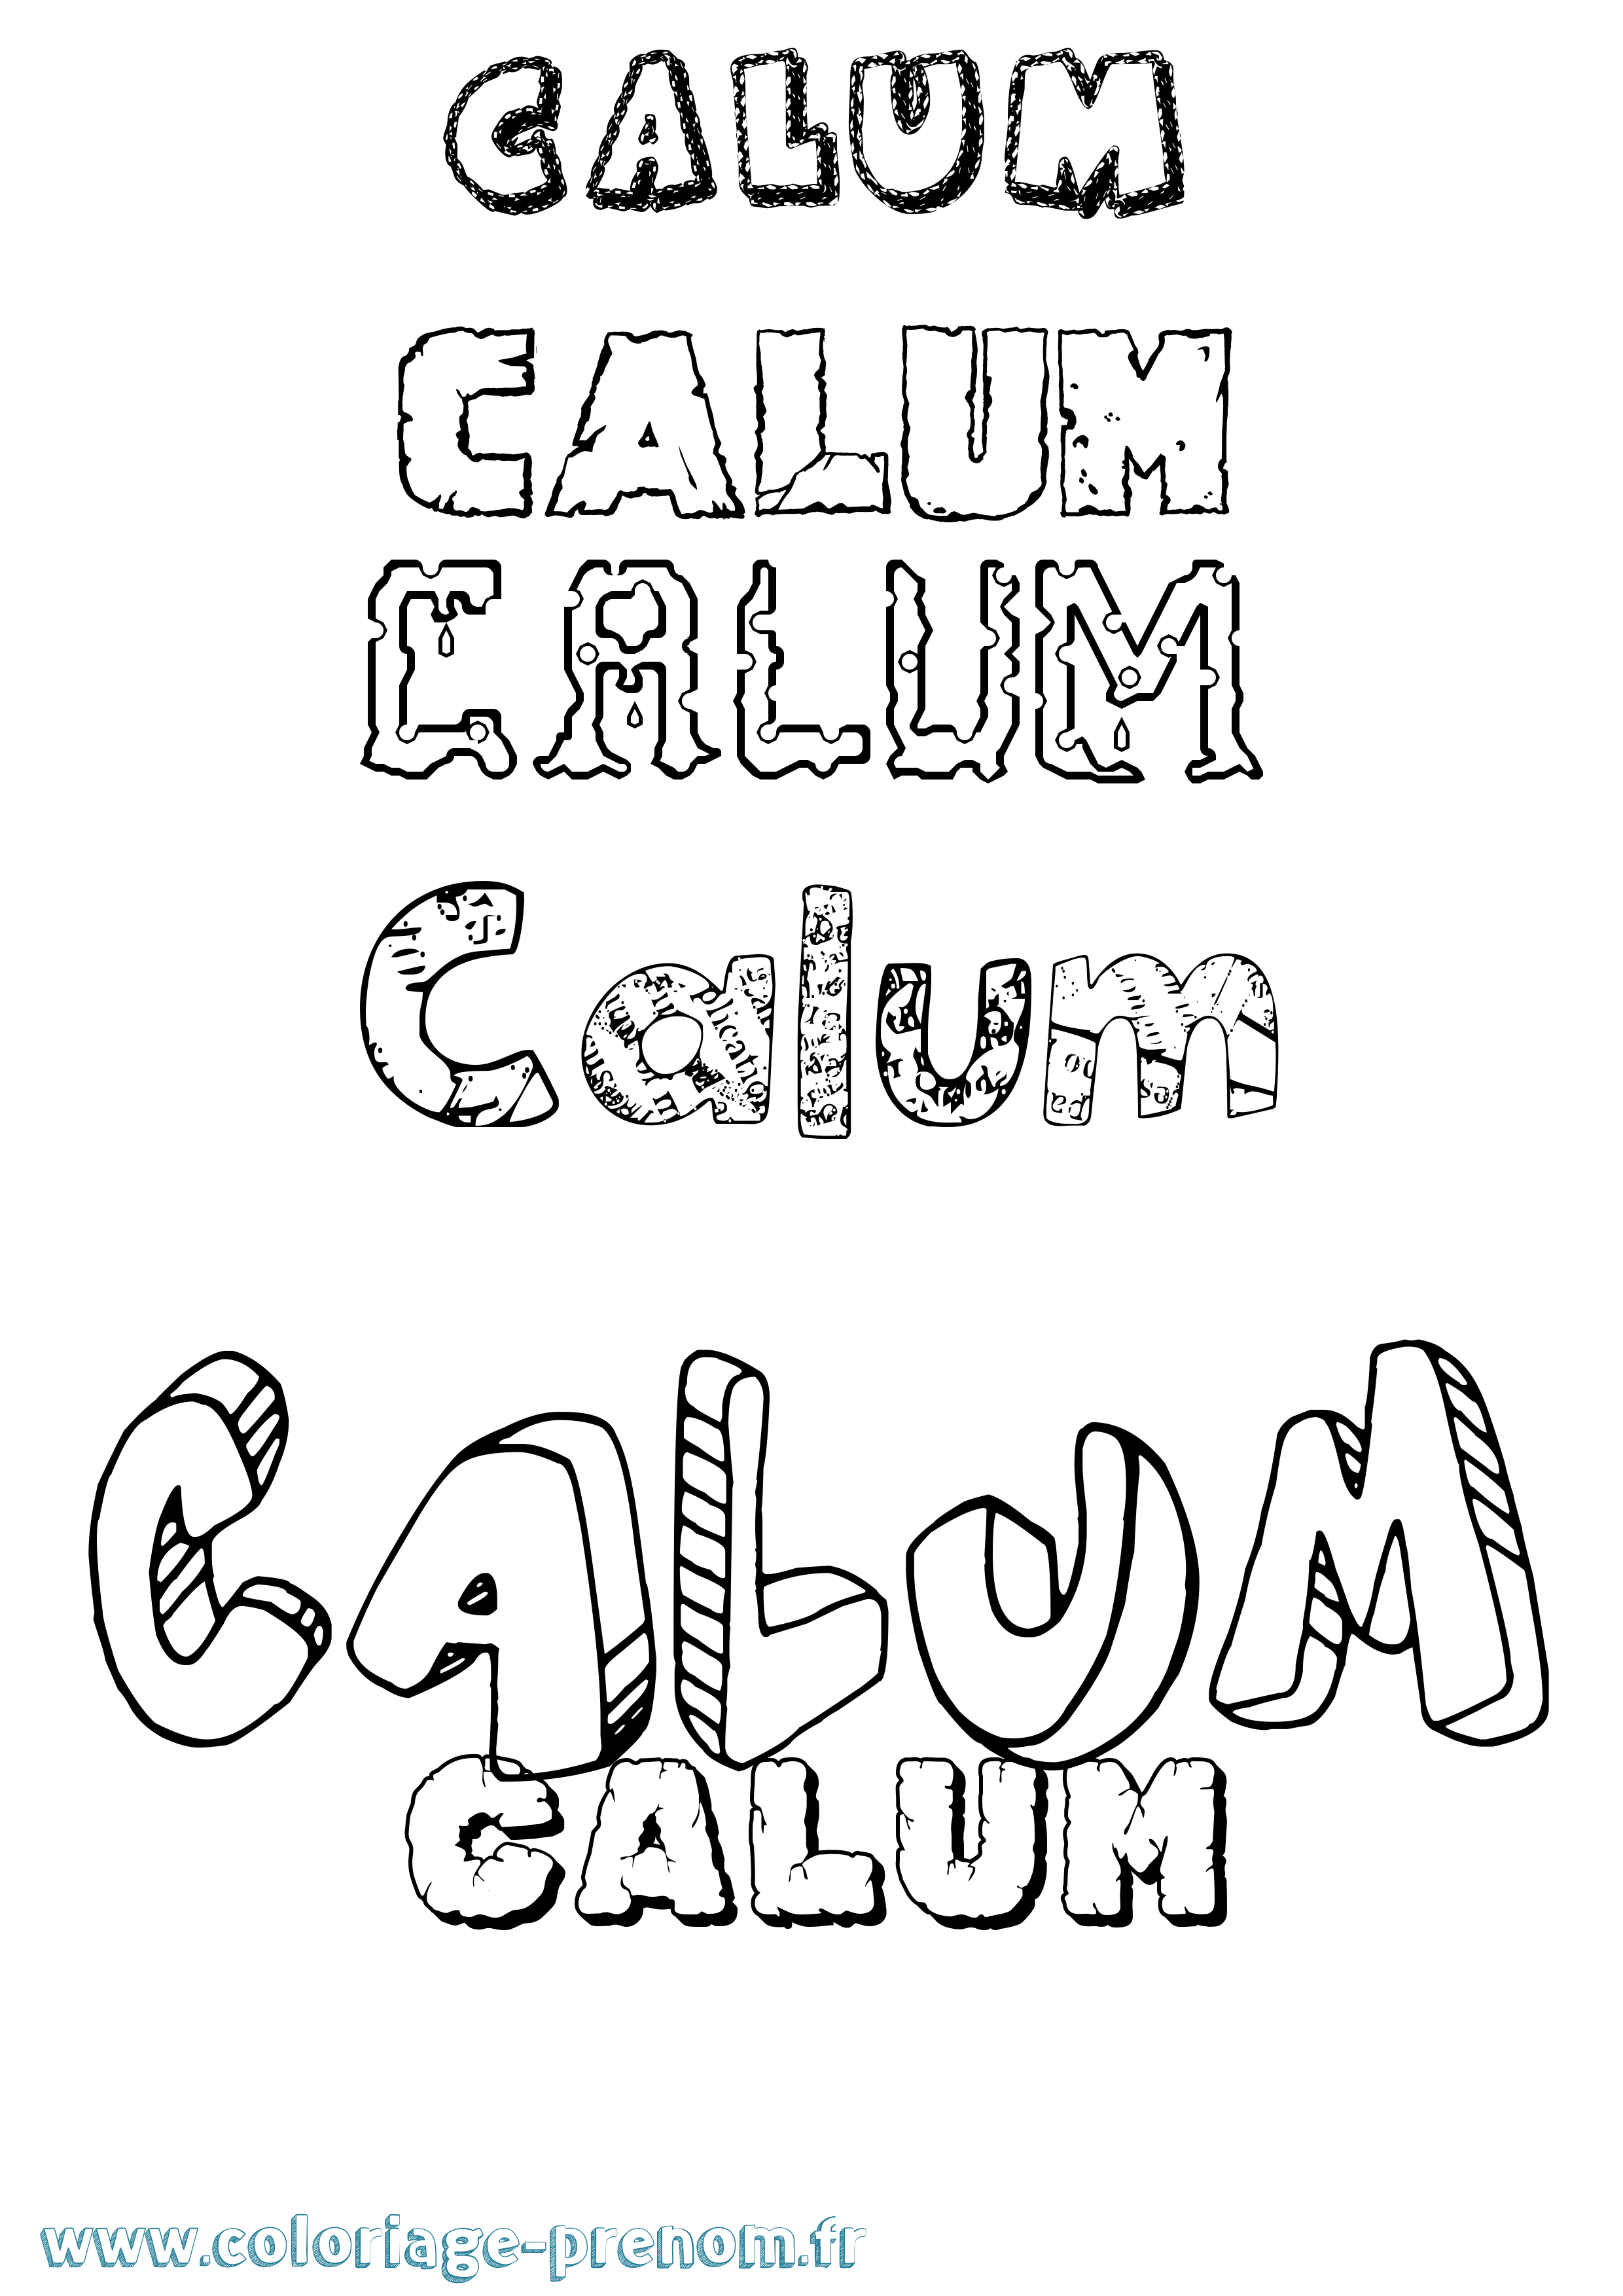 Coloriage prénom Calum Destructuré